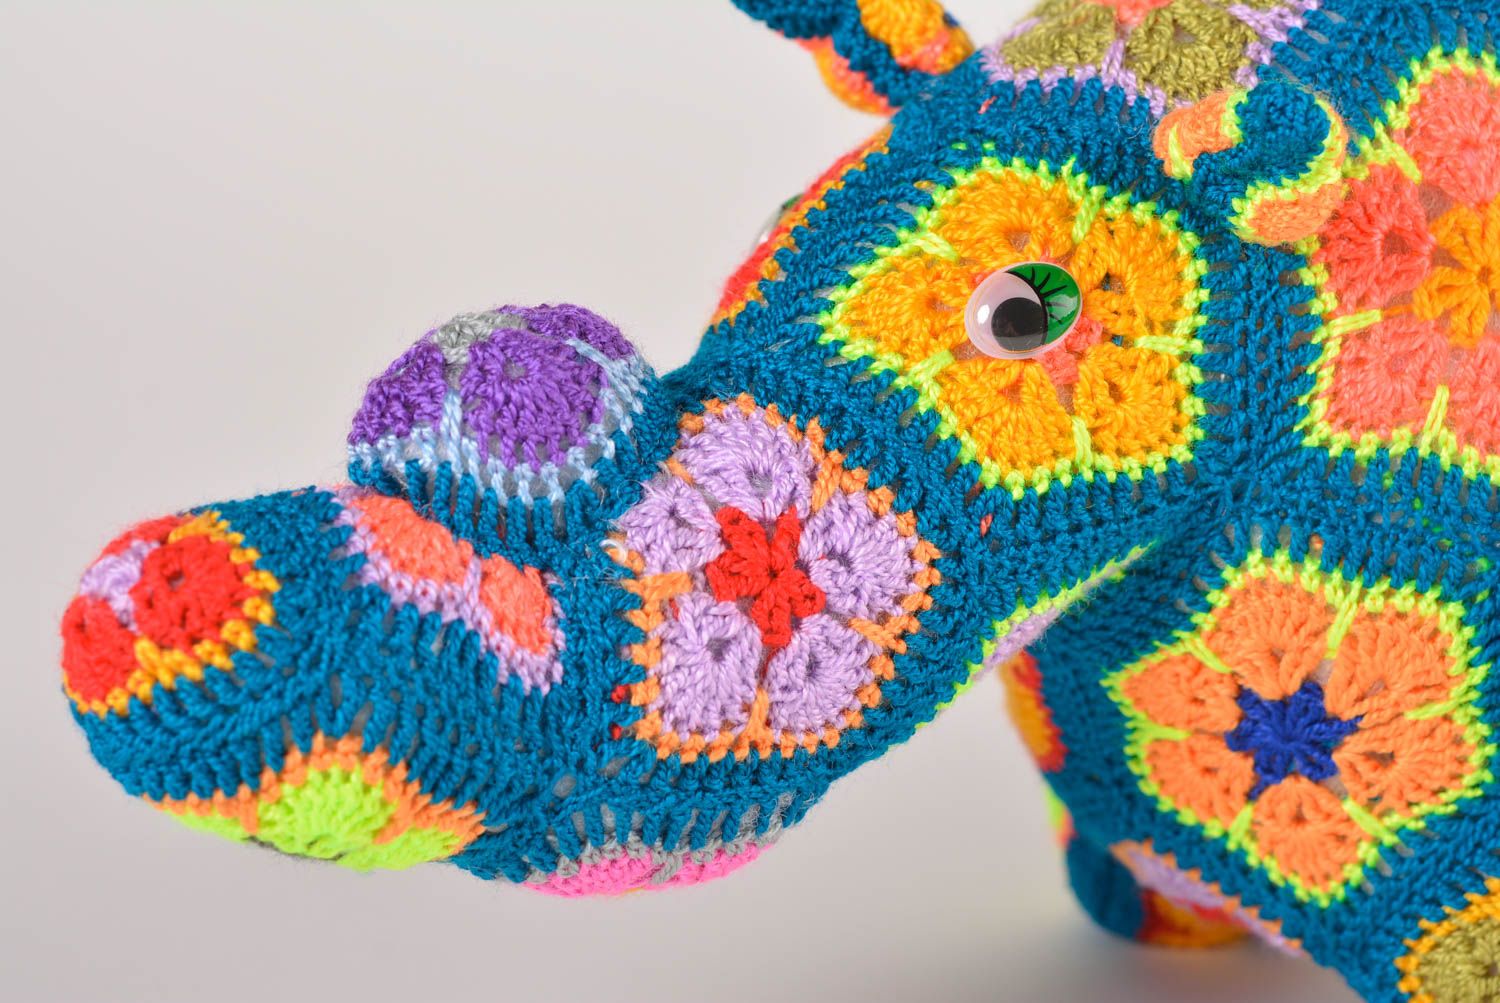 Beautiful handmade crochet toy stuffed toy soft toy for kids nursery design photo 2